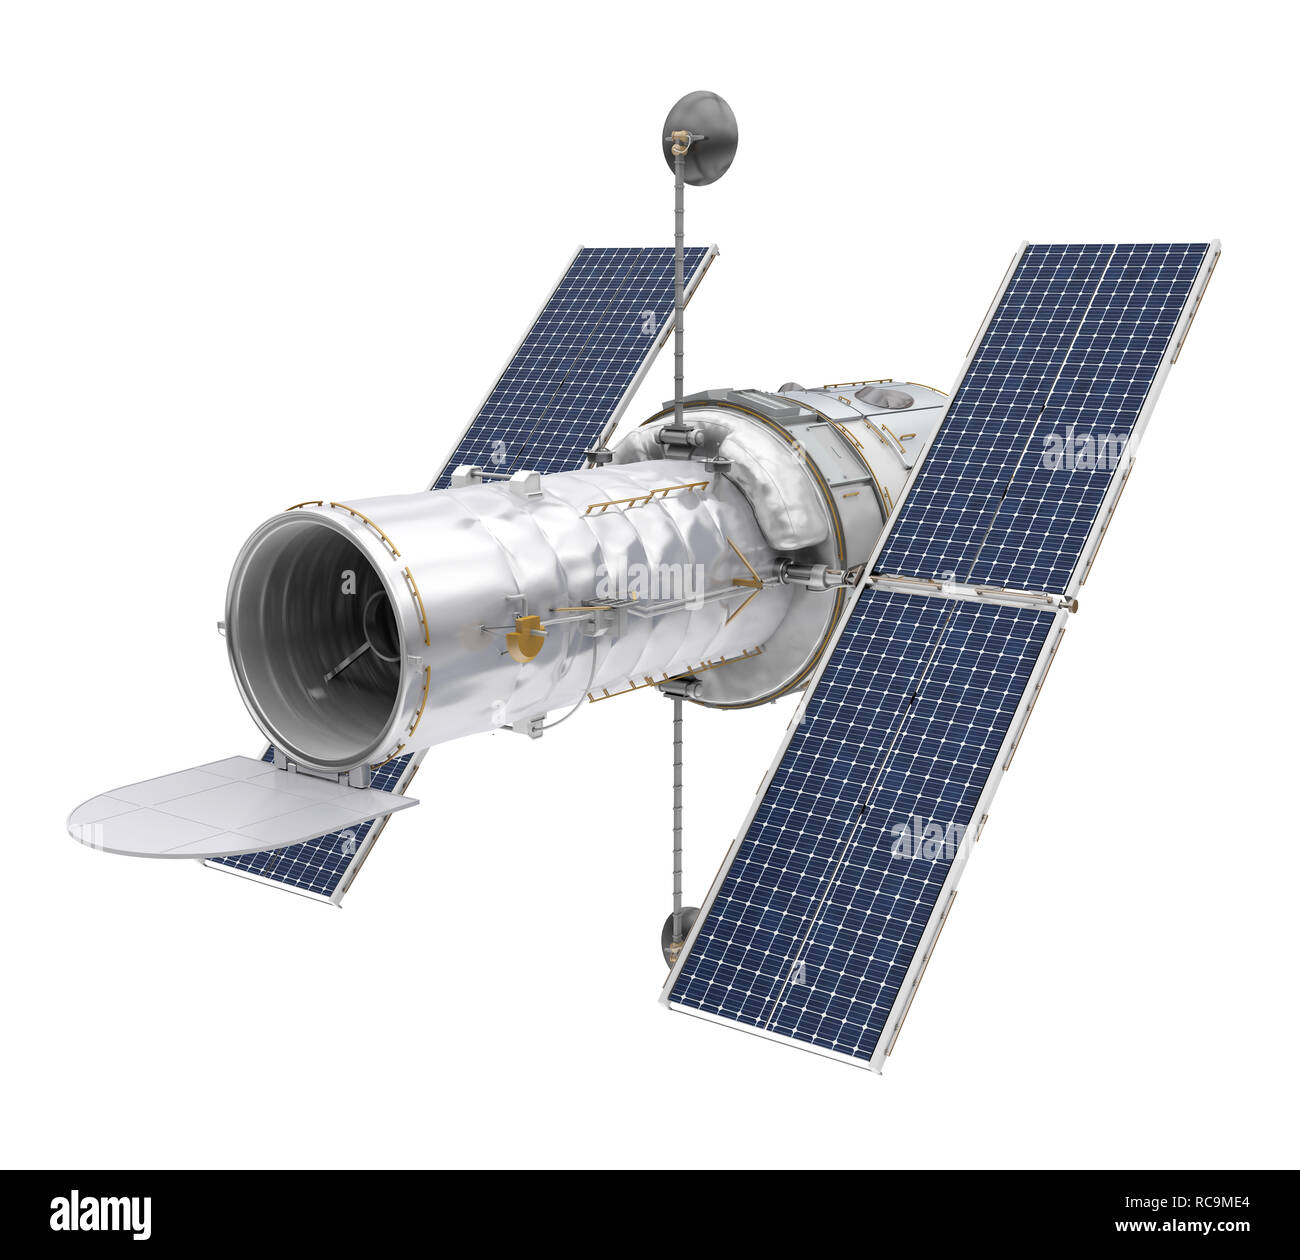 Télescope spatial Hubble Isolated Banque D'Images